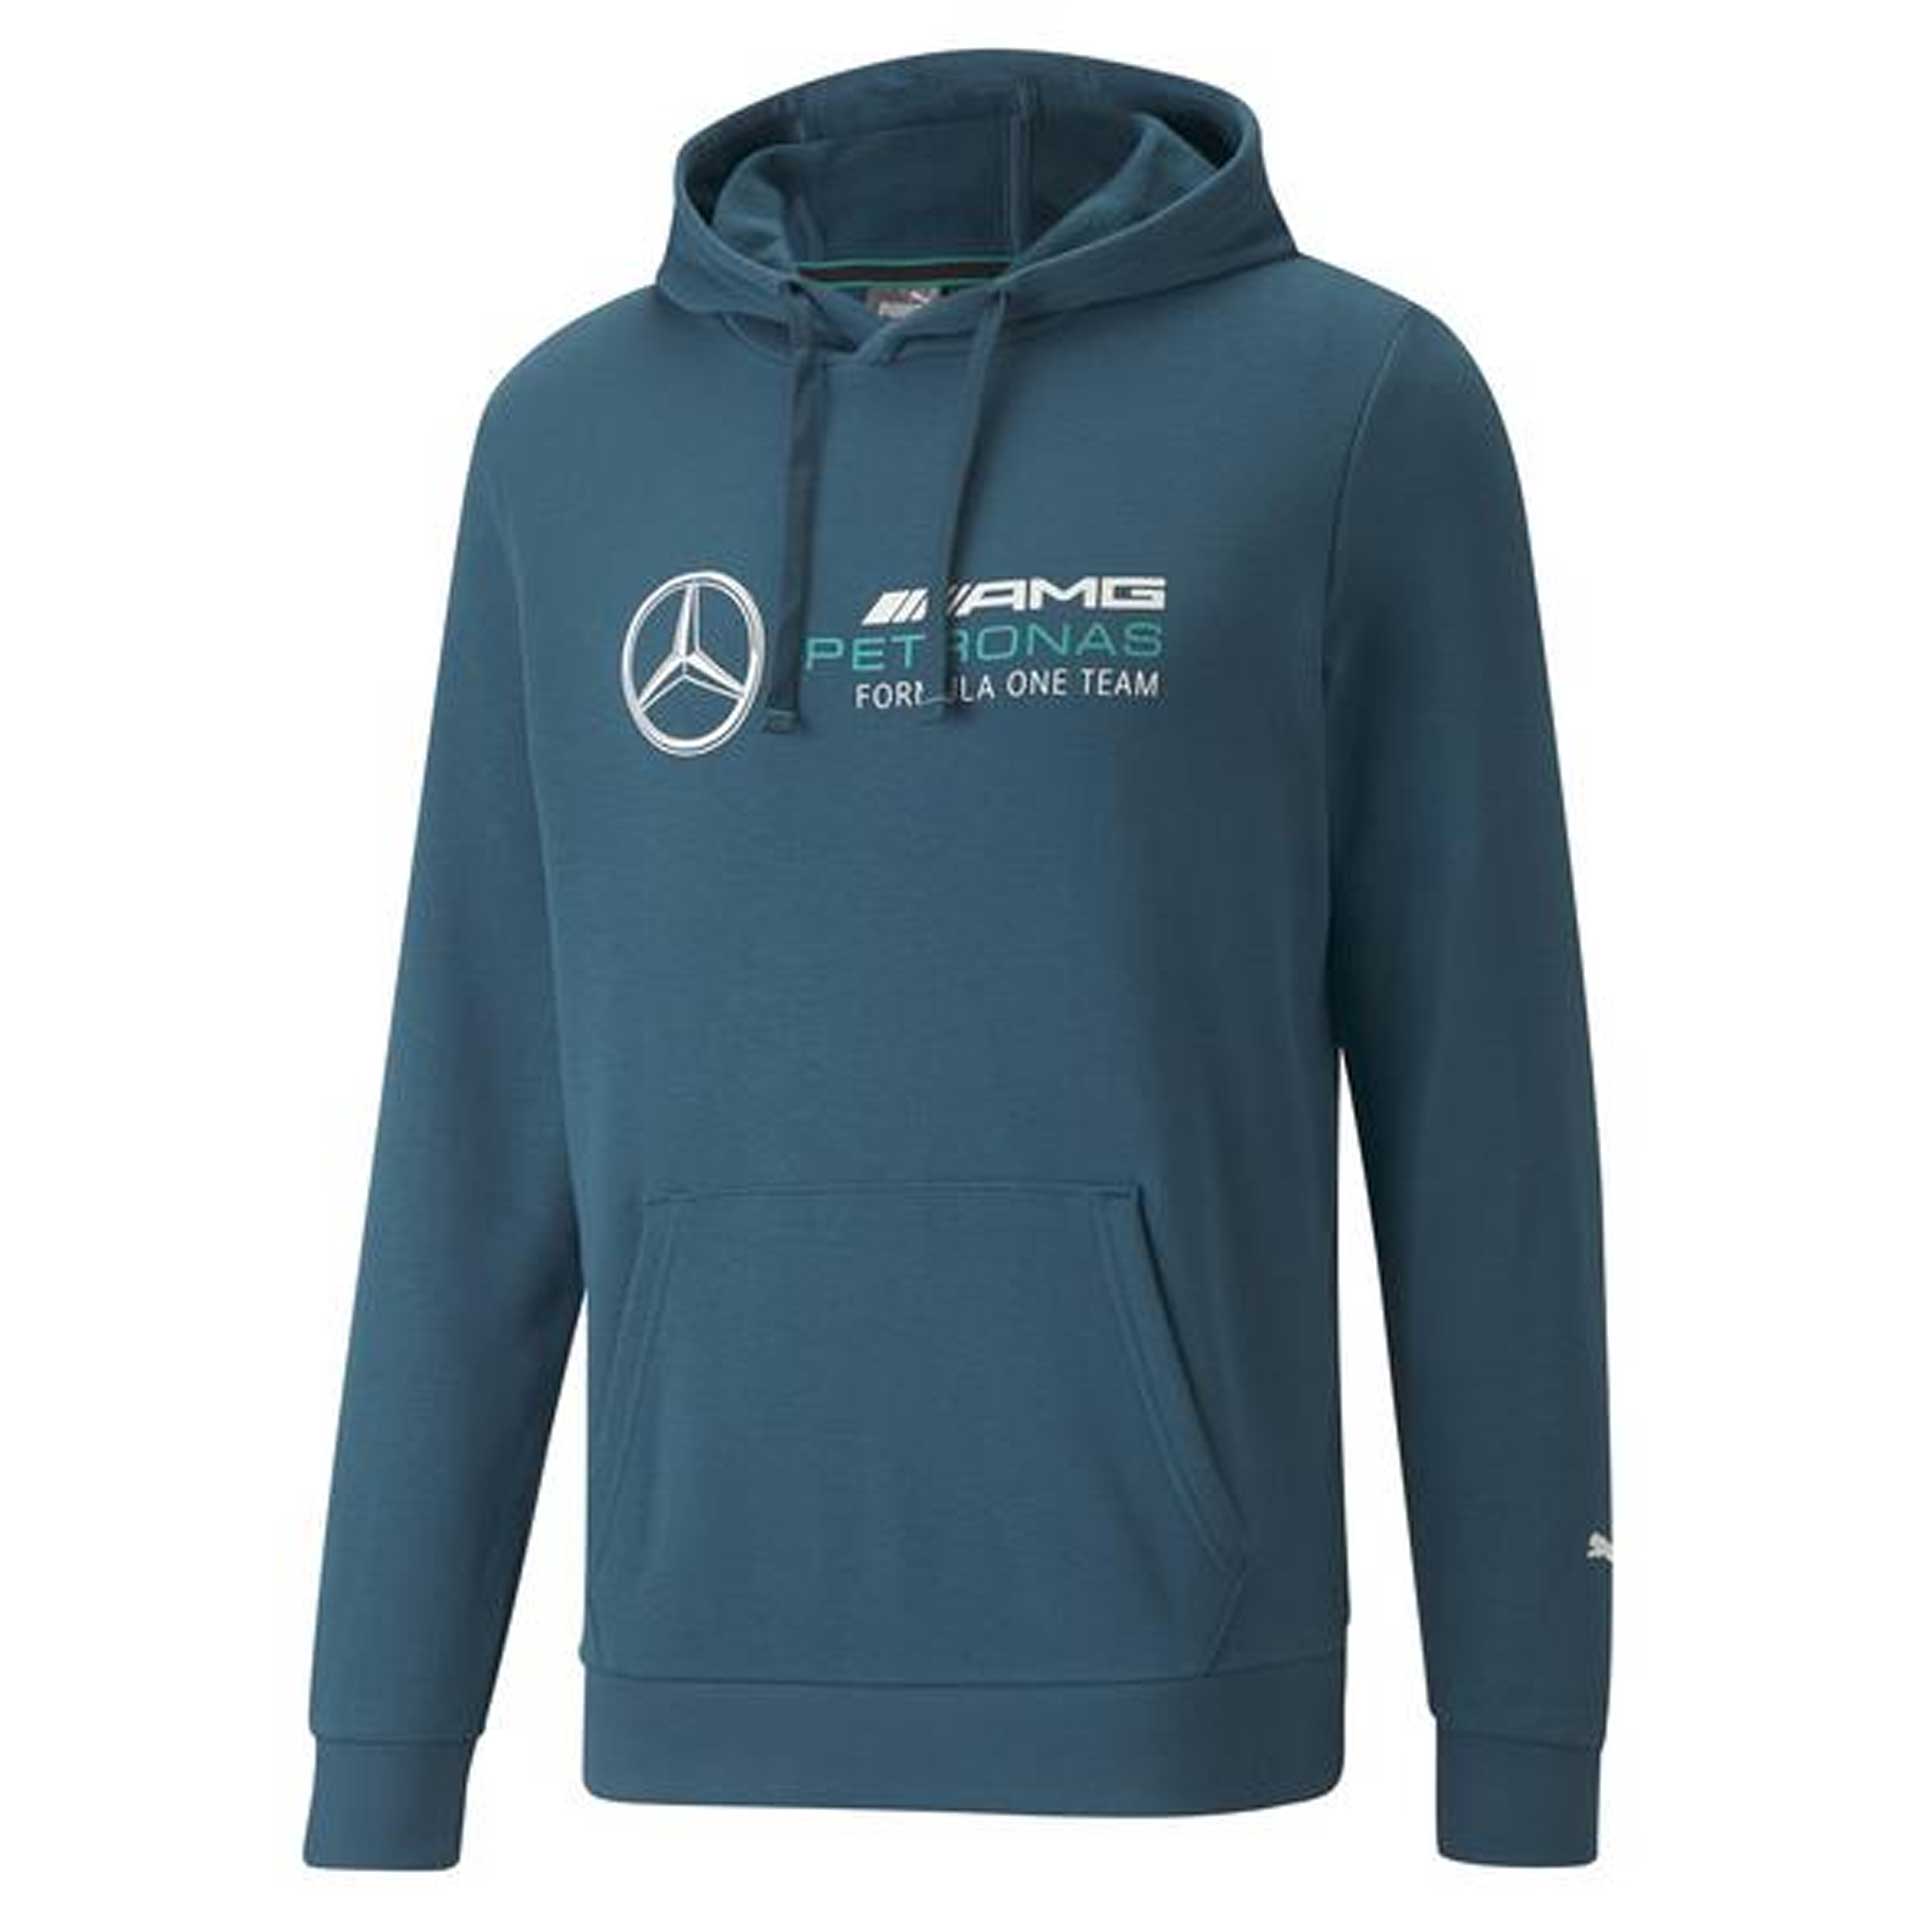 Mercedes-AMG Sweathoody Herren blau Petronas Motorsports Collection by PUMA Größe M B67997337